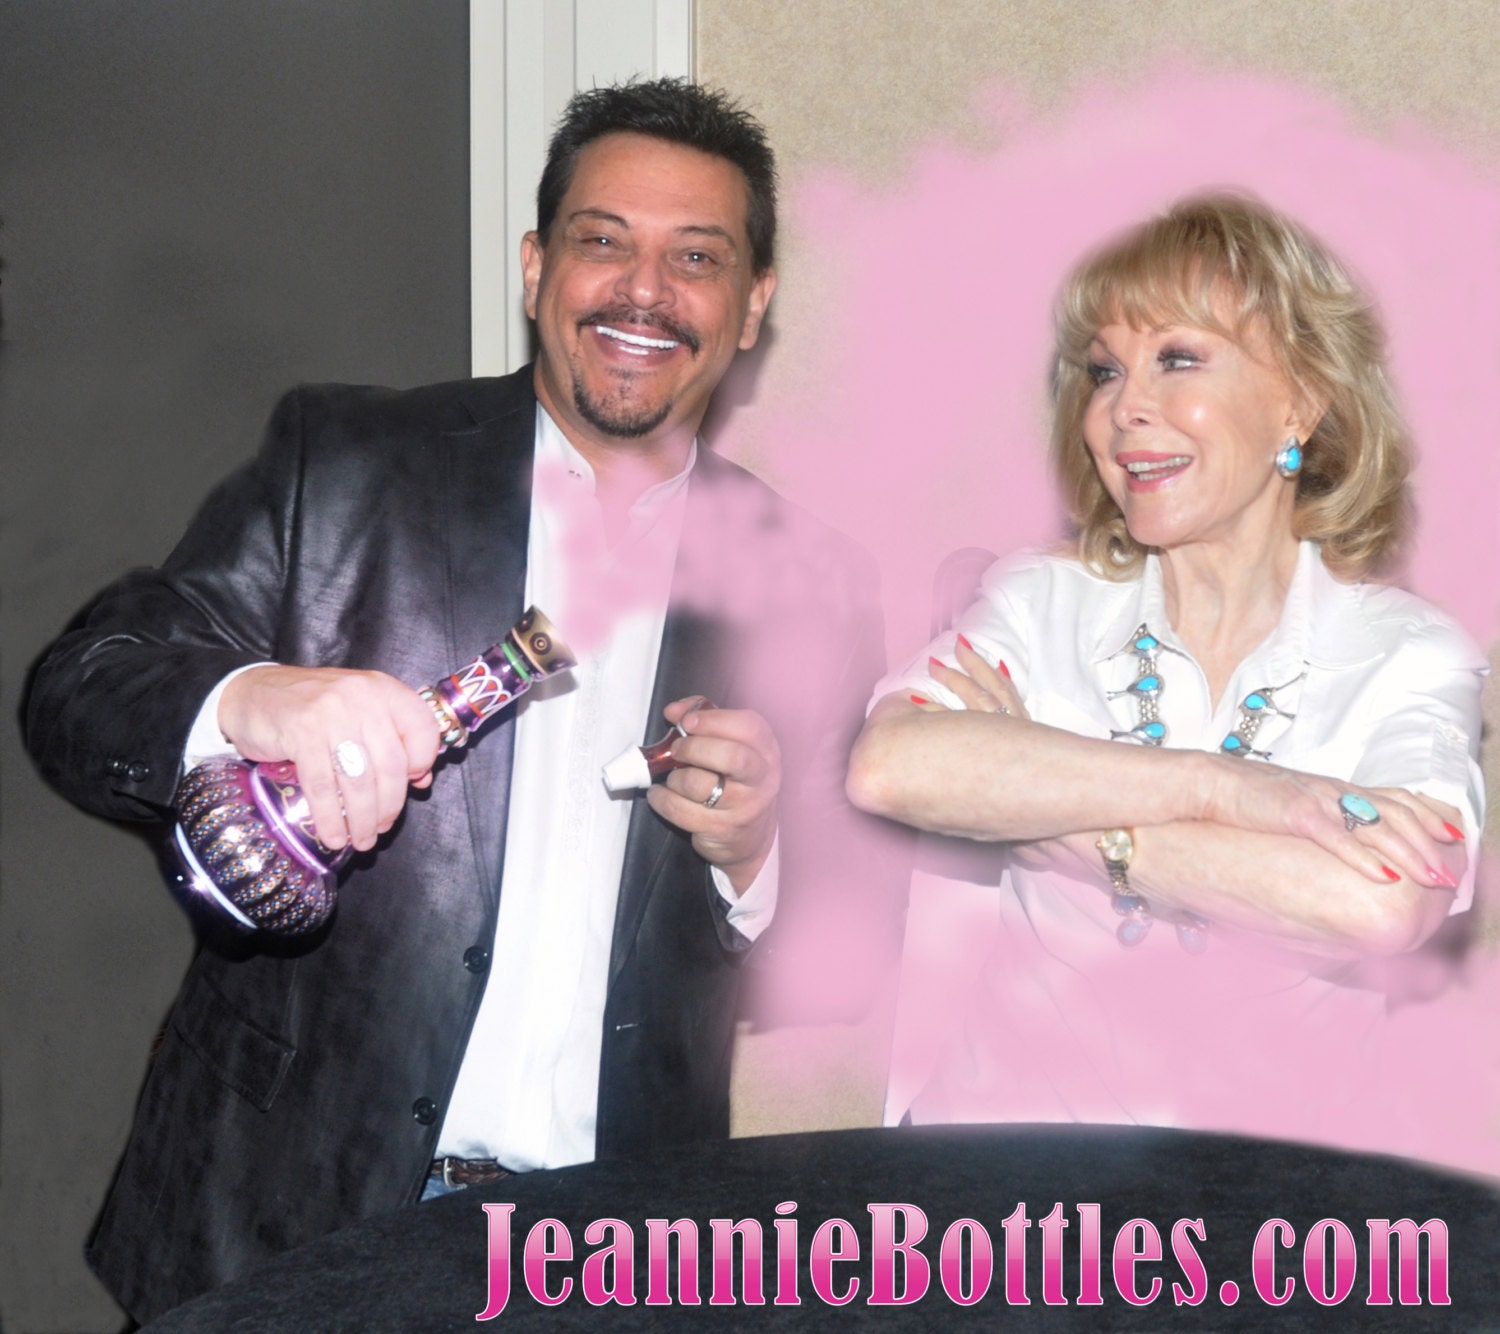 EKOUSN Black and Friday Deals I Dream Of Jeannie Bottle From Mario-Della  Casa-Second Season Glass MIRRORED Purple Bottle!Pagoda Spirit Bottle